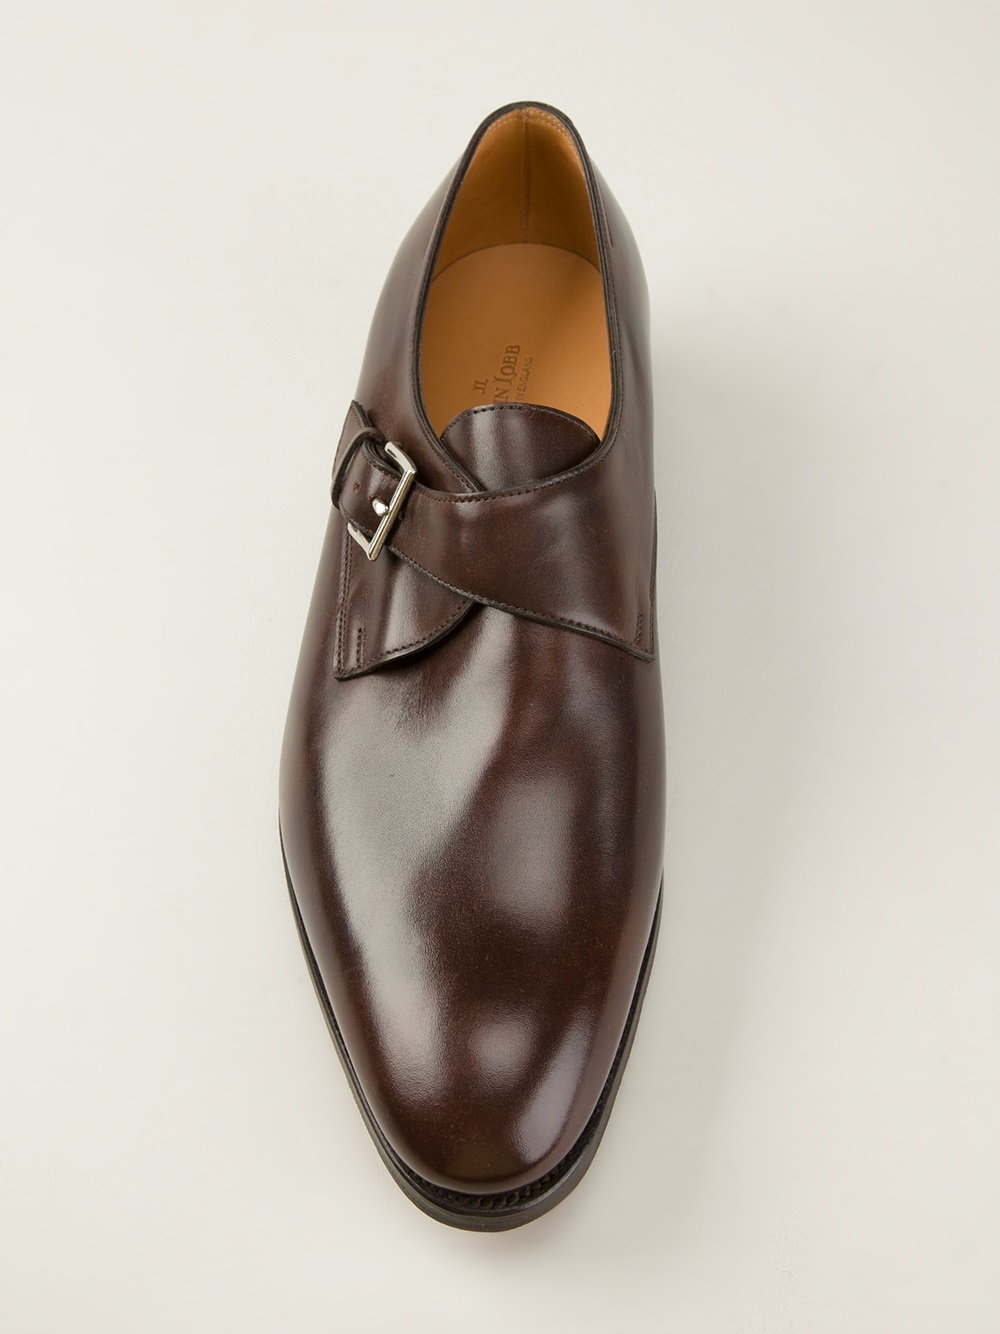 John Lobb 'ashill' Monk Shoes in Brown for Men - Lyst